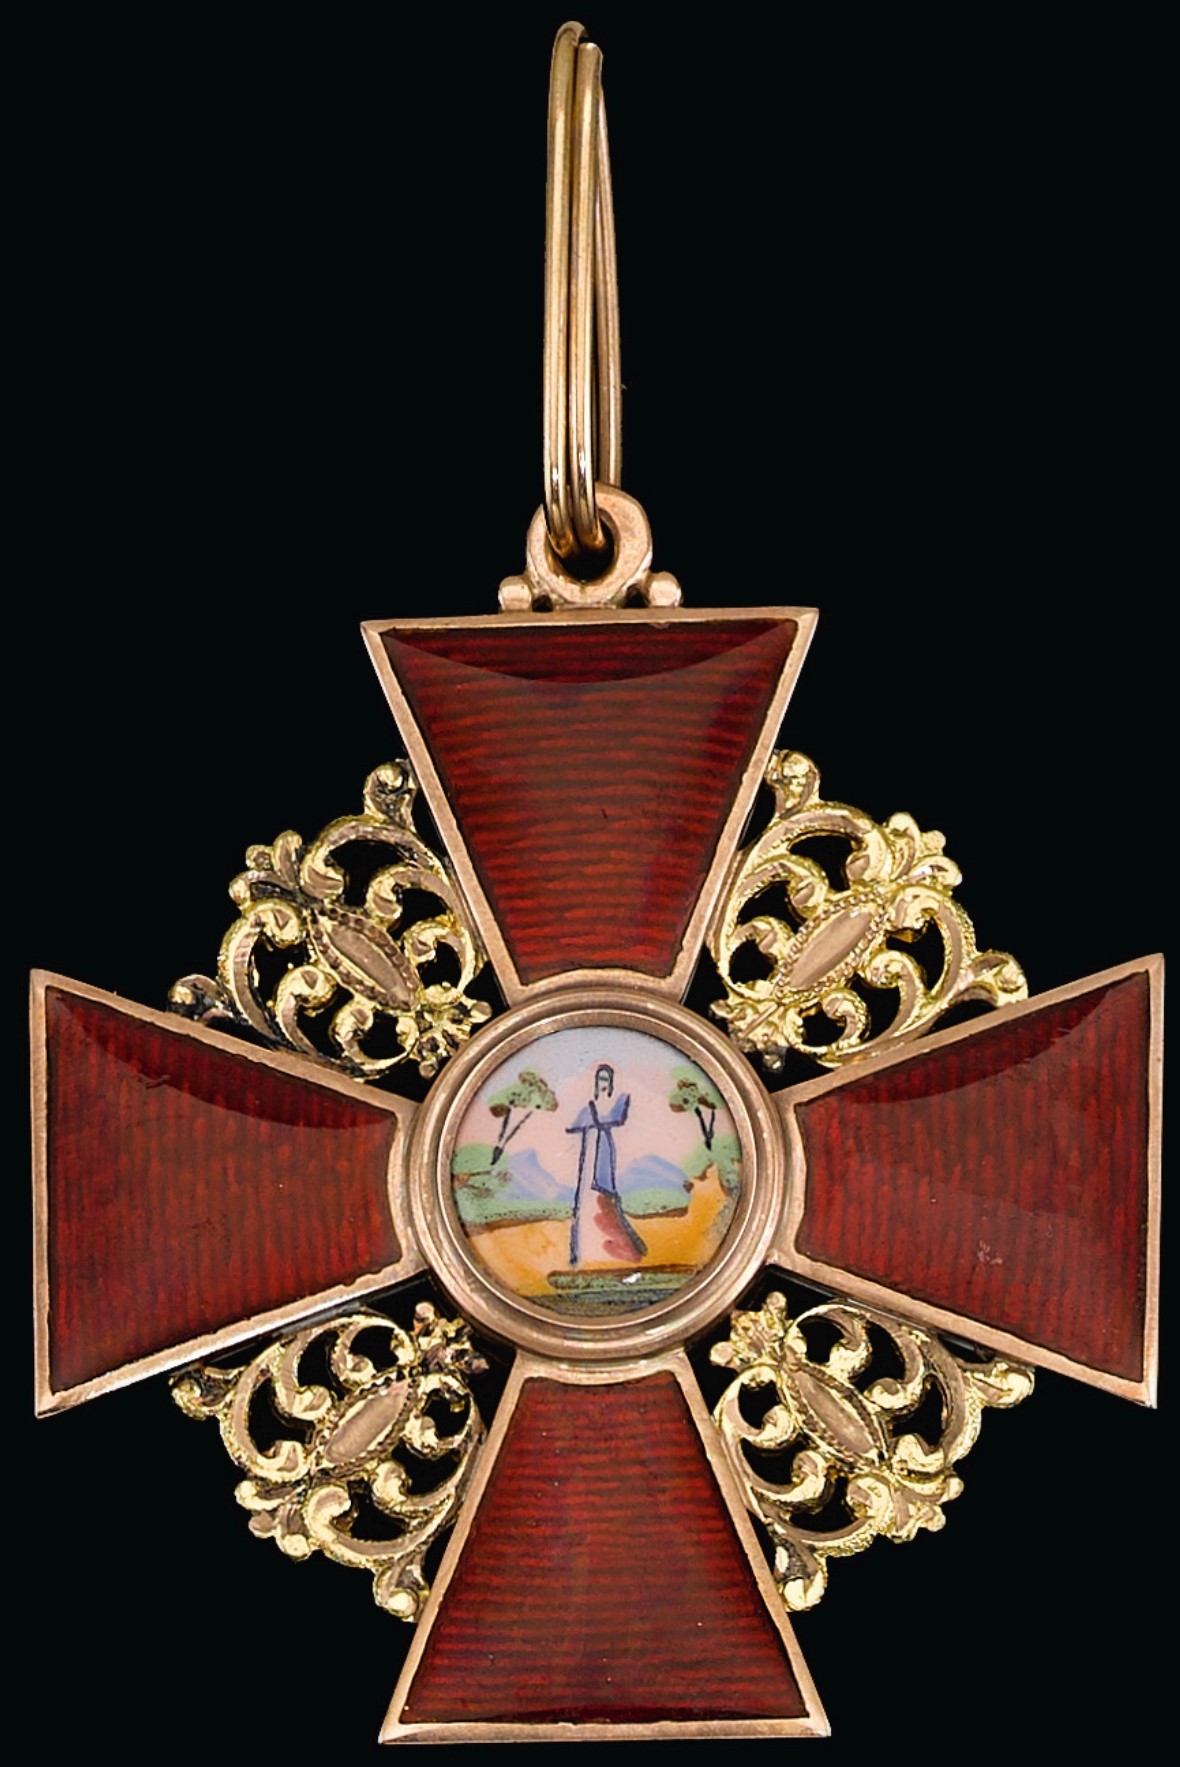 Order of St. Anna of Prince George, Duke of Cambridge.jpg